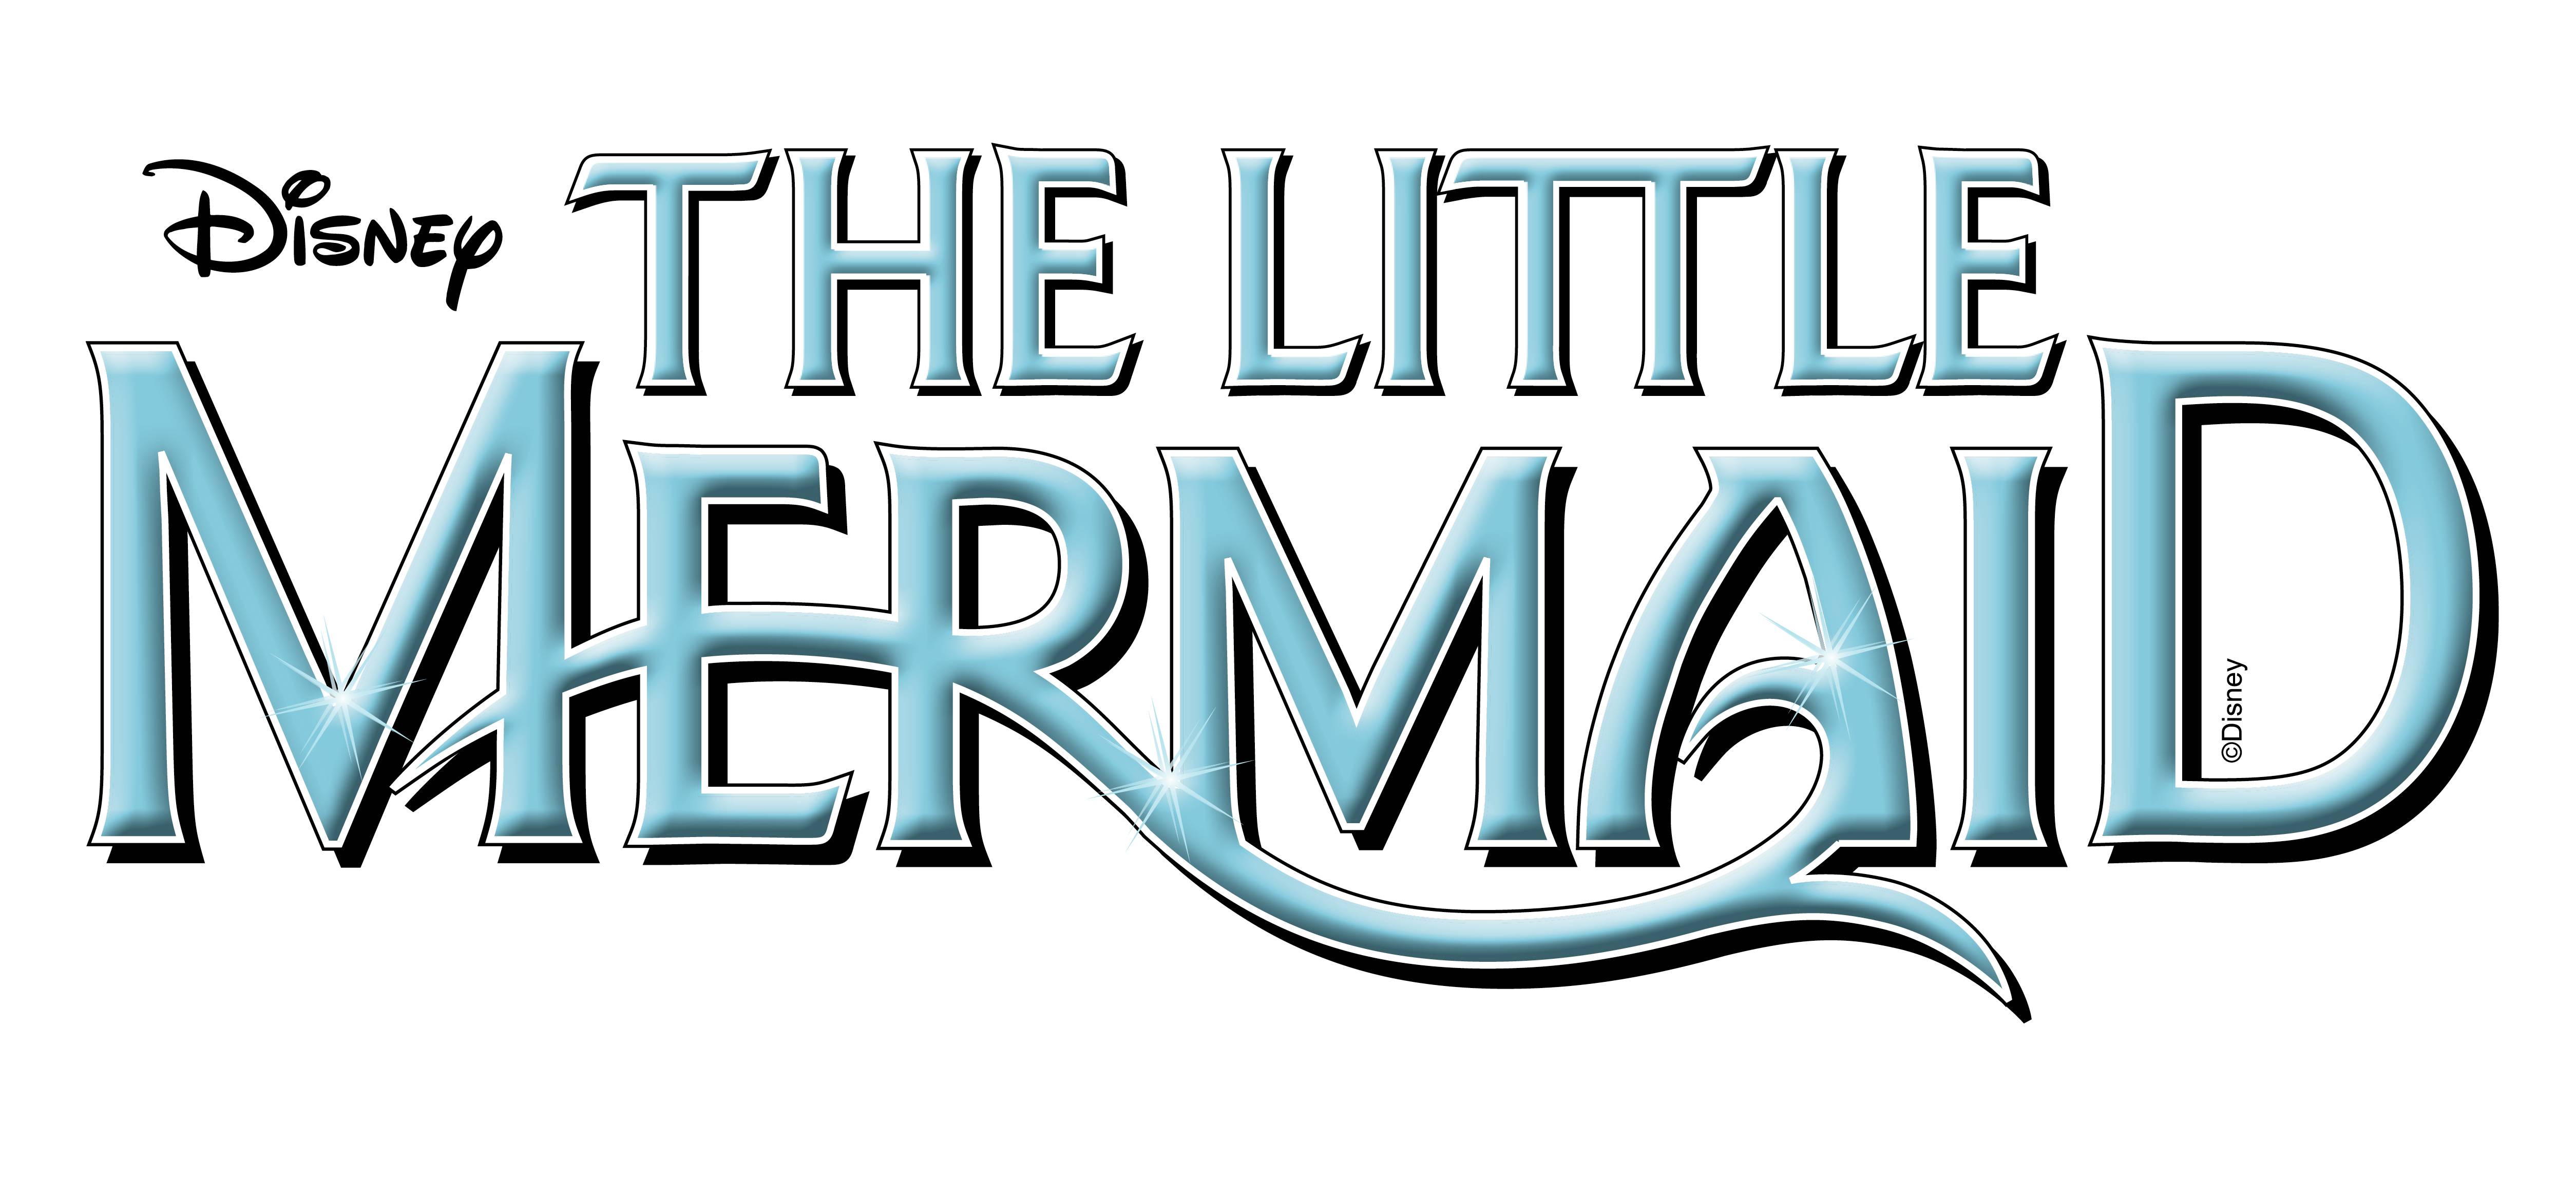 Disney Little Mermaid Logo - The Little Mermaid